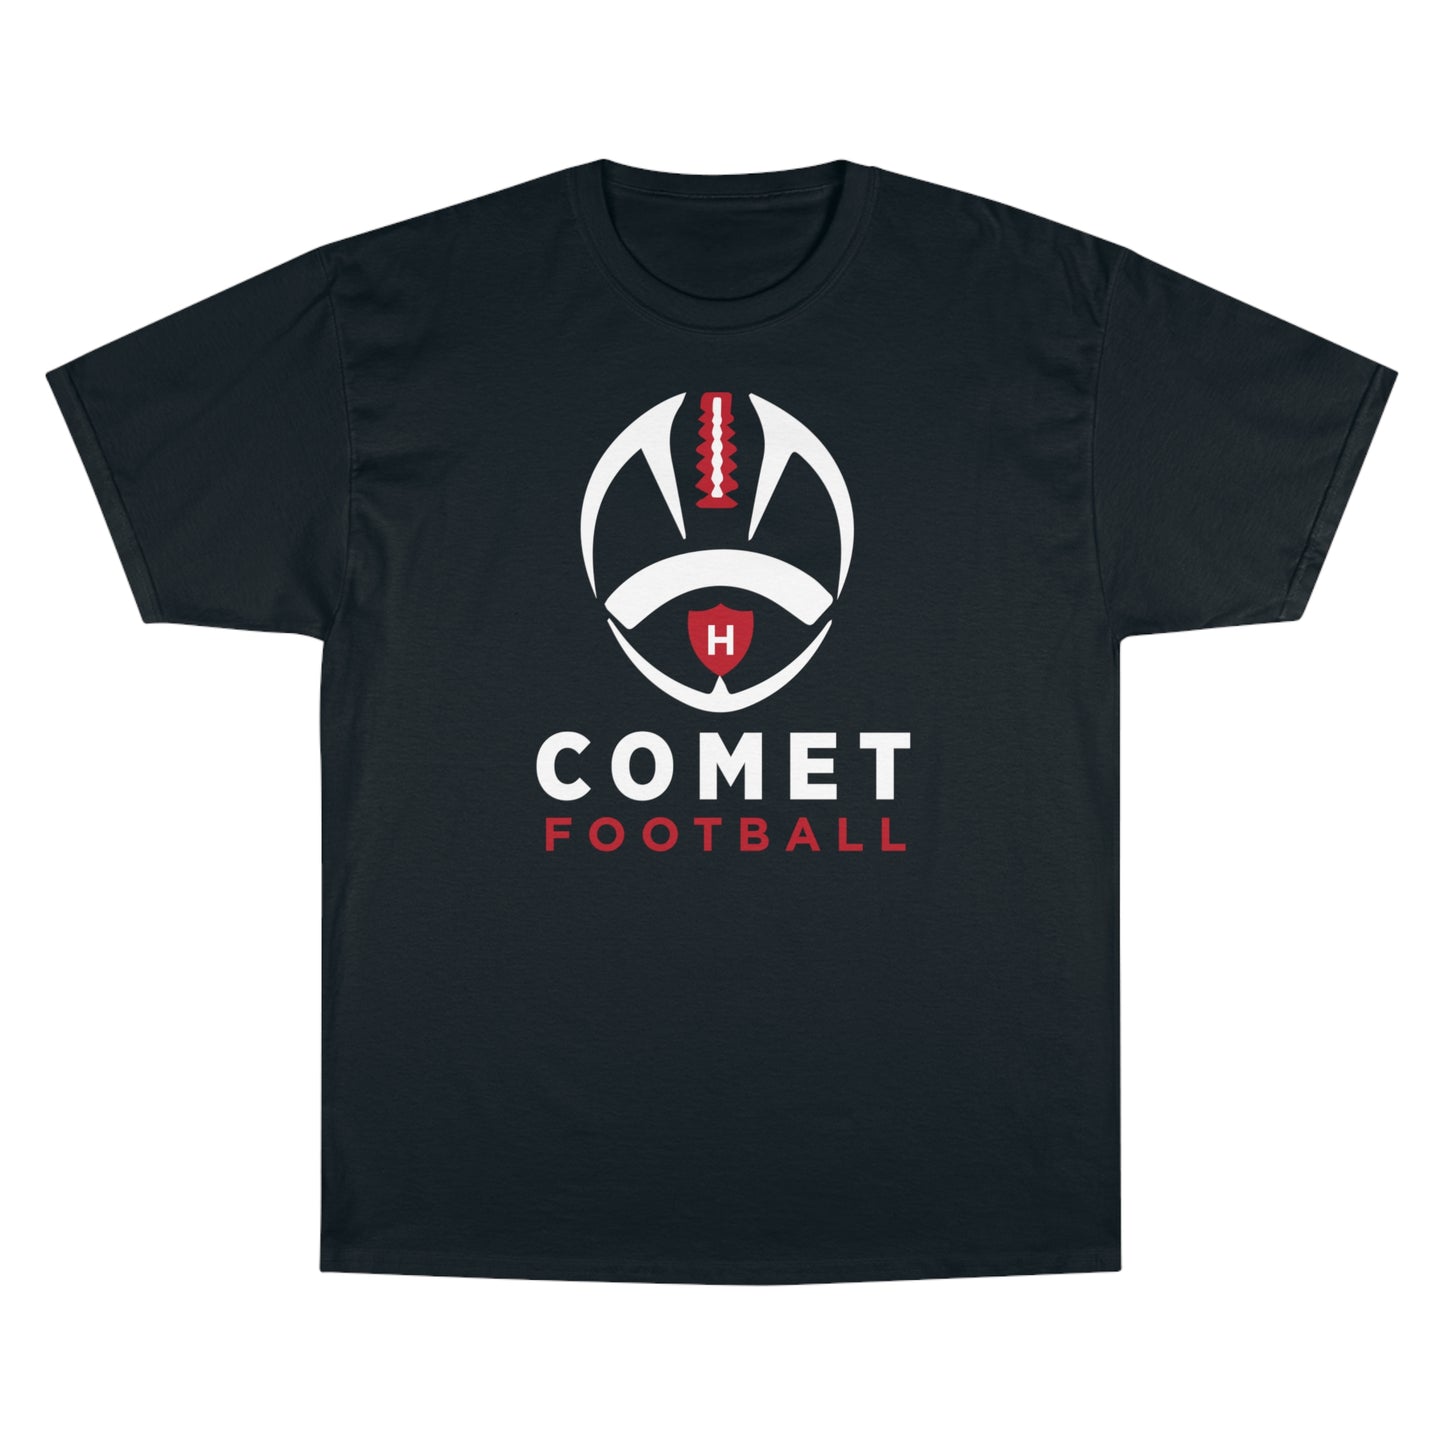 Comet Football - Champion T-Shirt